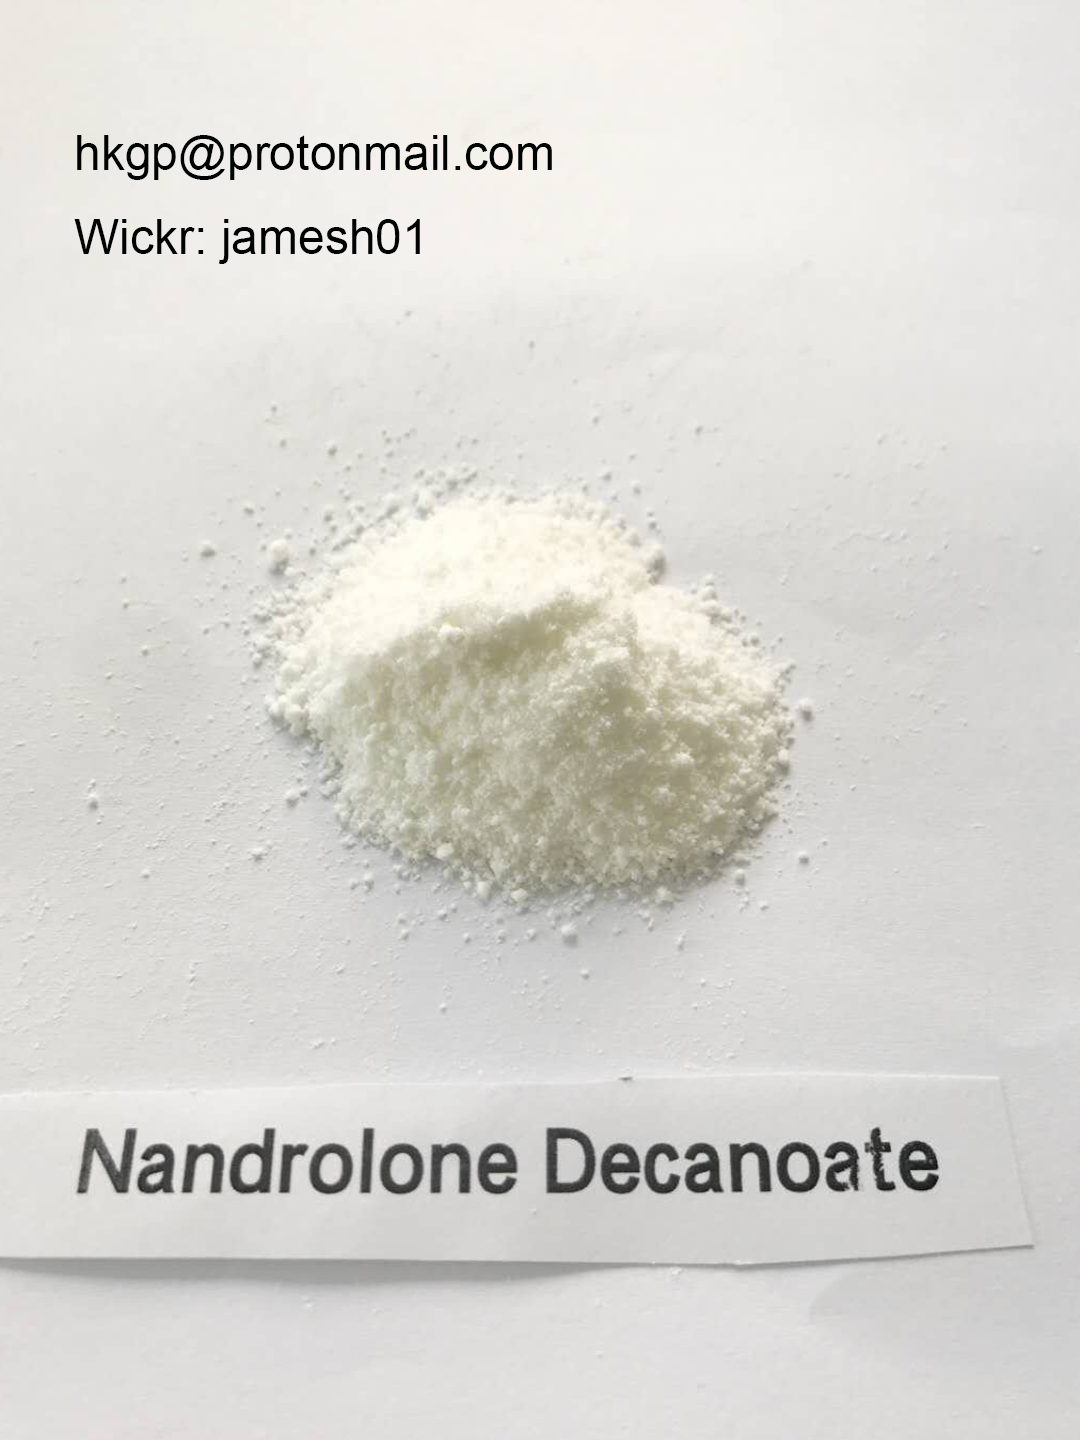 Pure Nandrolone Decanoate Powder